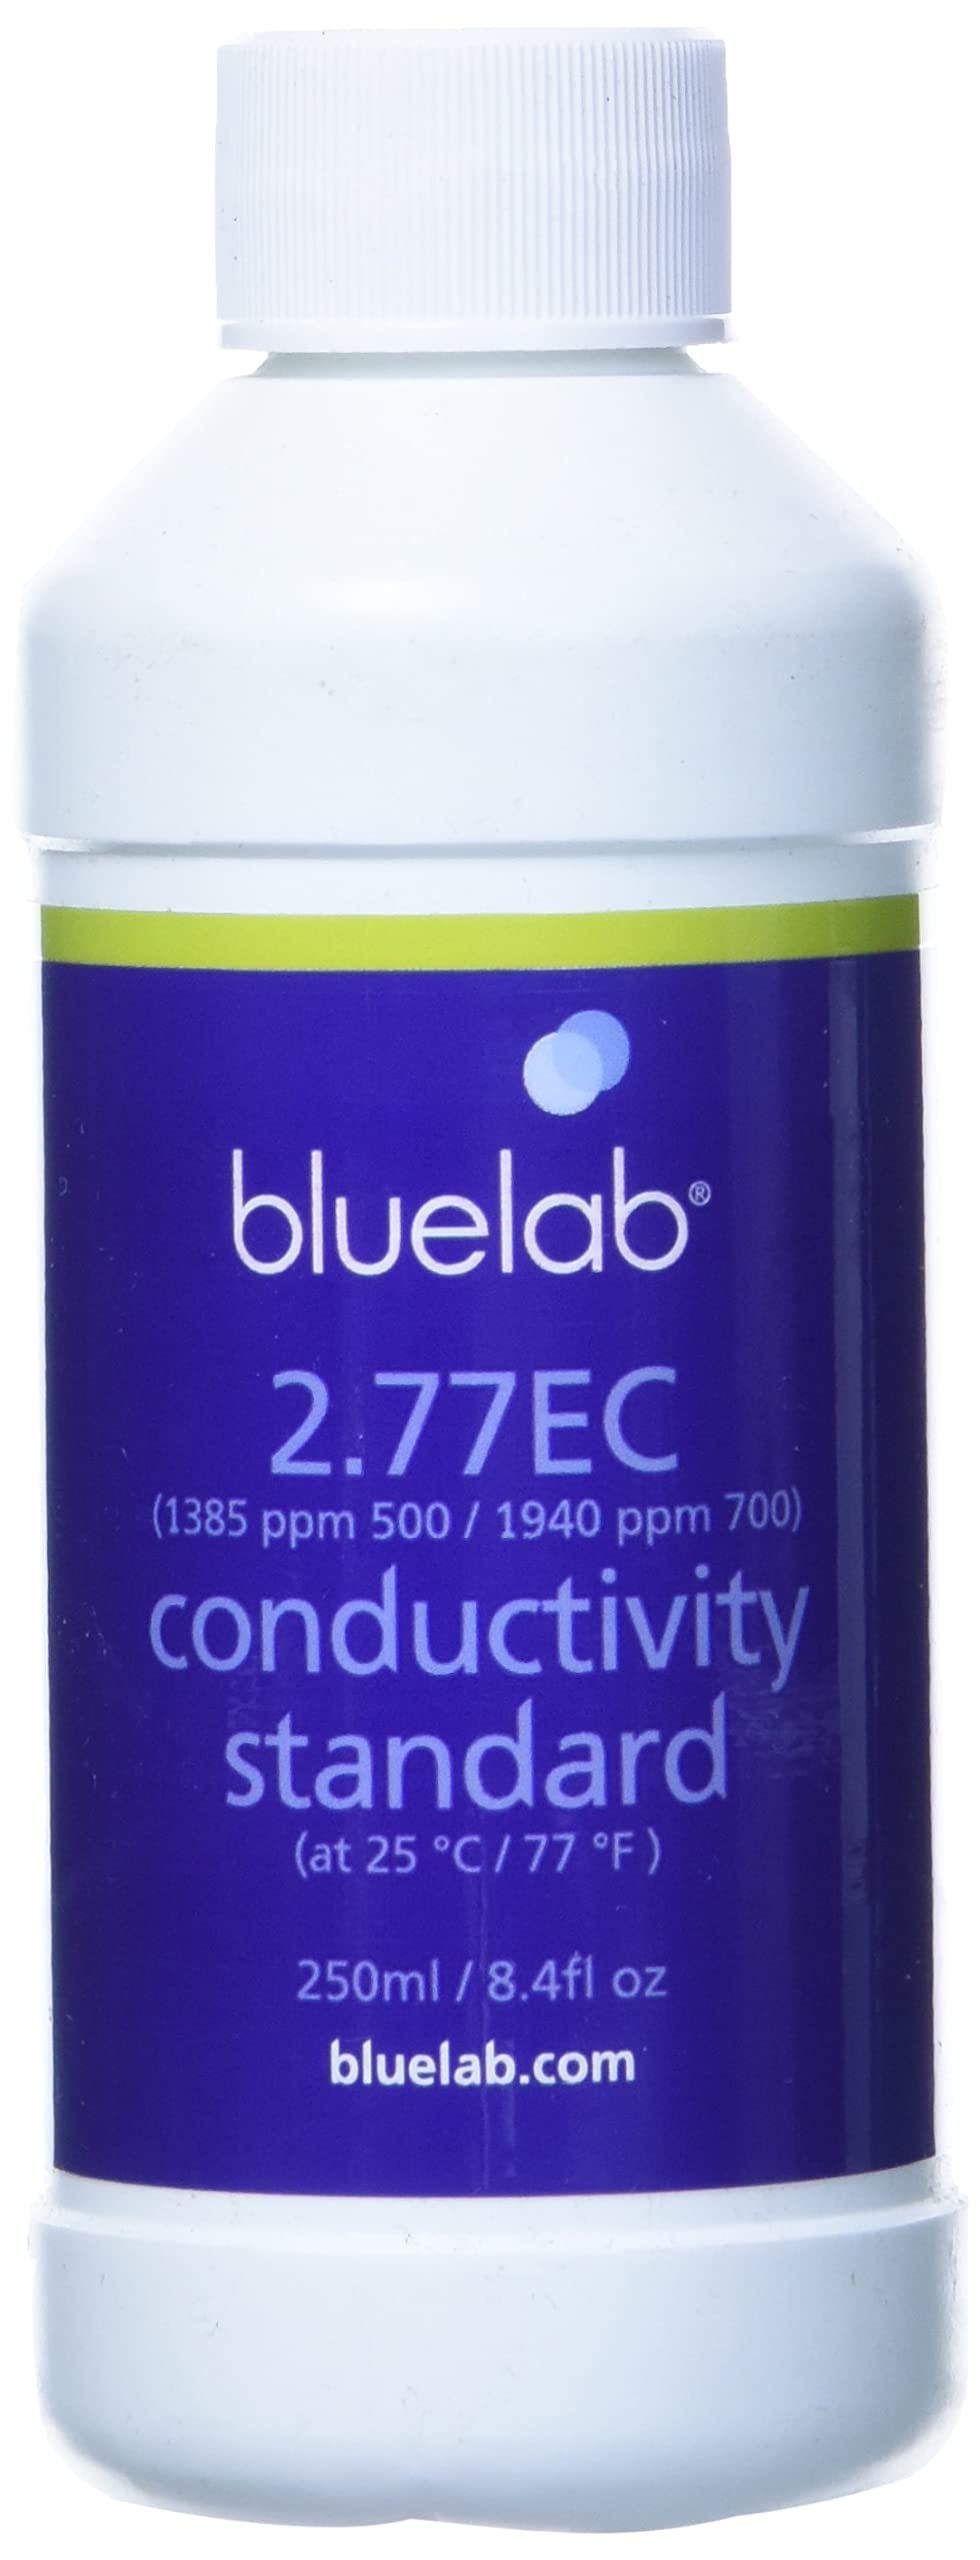 Bluelab 2.77EC Conductivity Solution